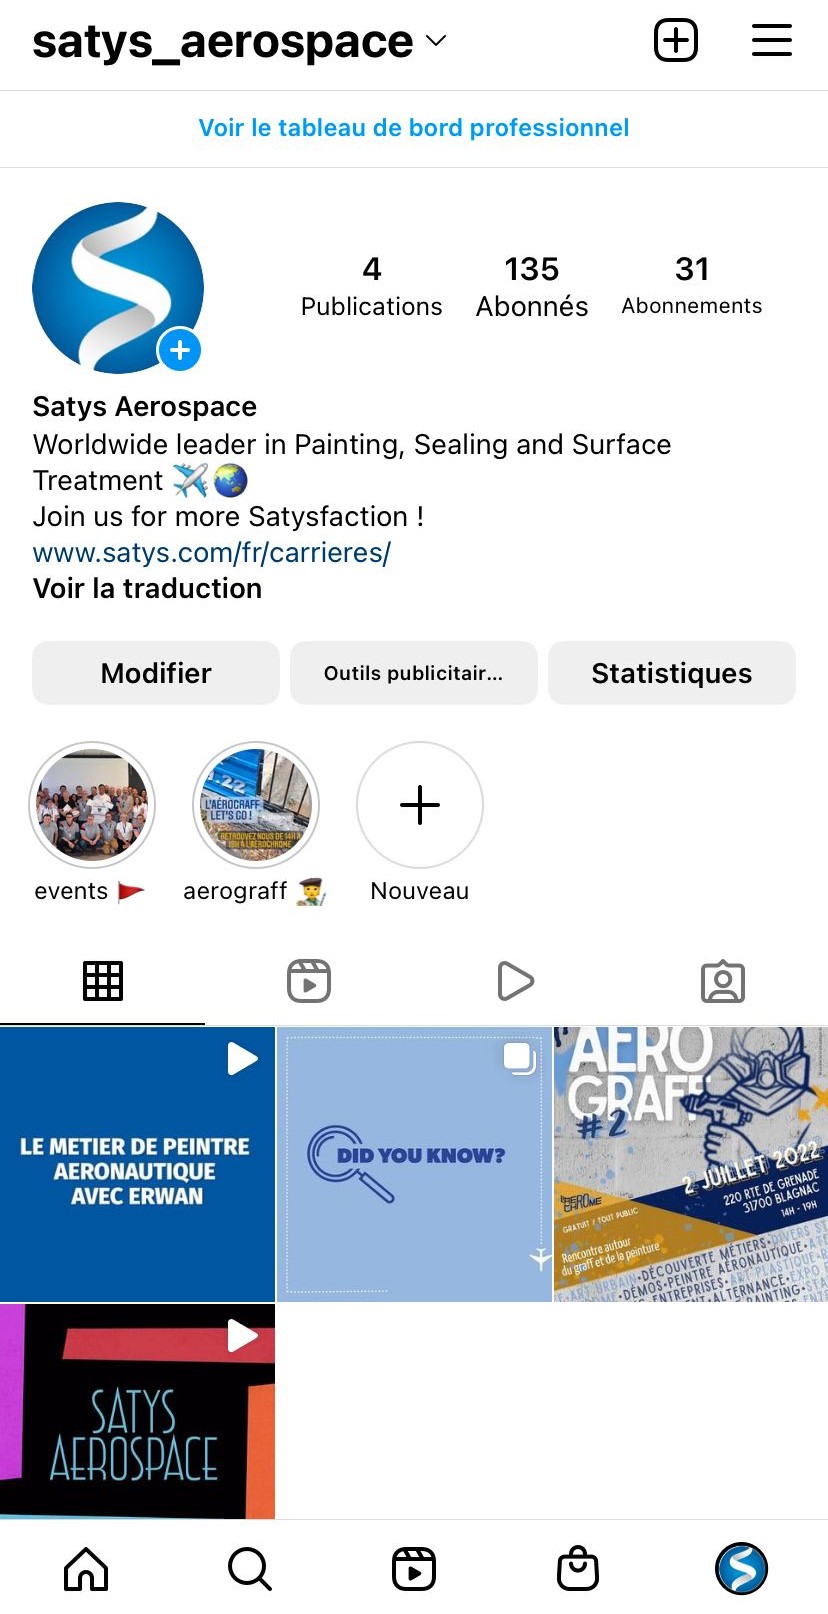 Satys Aerospace is now on Instagram !